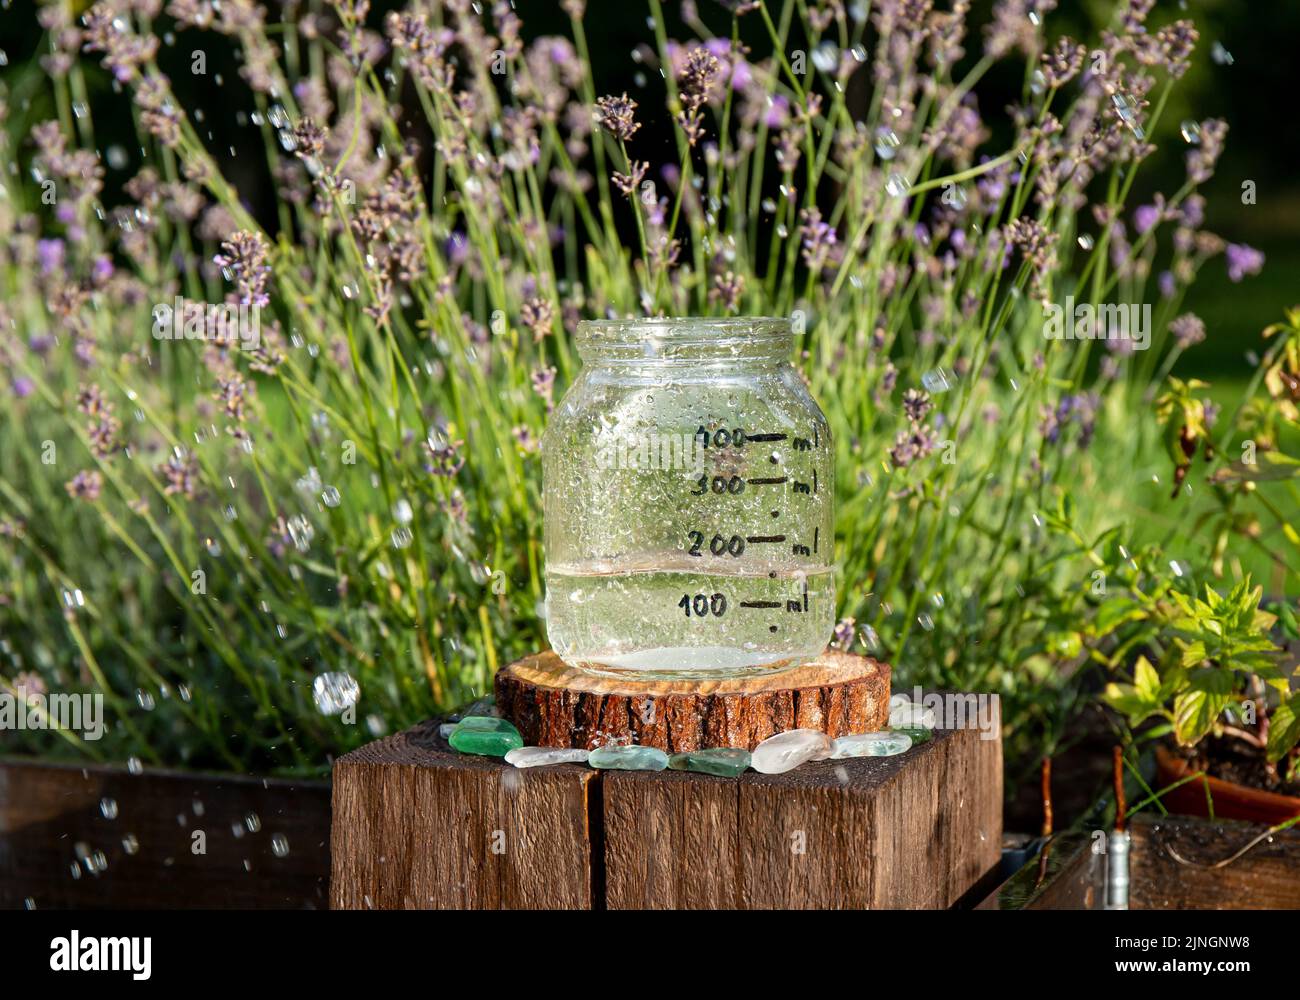 Handmade rain water gauge made of glass jar, measuring rain in home garden. Raining outdoors in garden. Also known as udometer, pluvia metior. Stock Photo